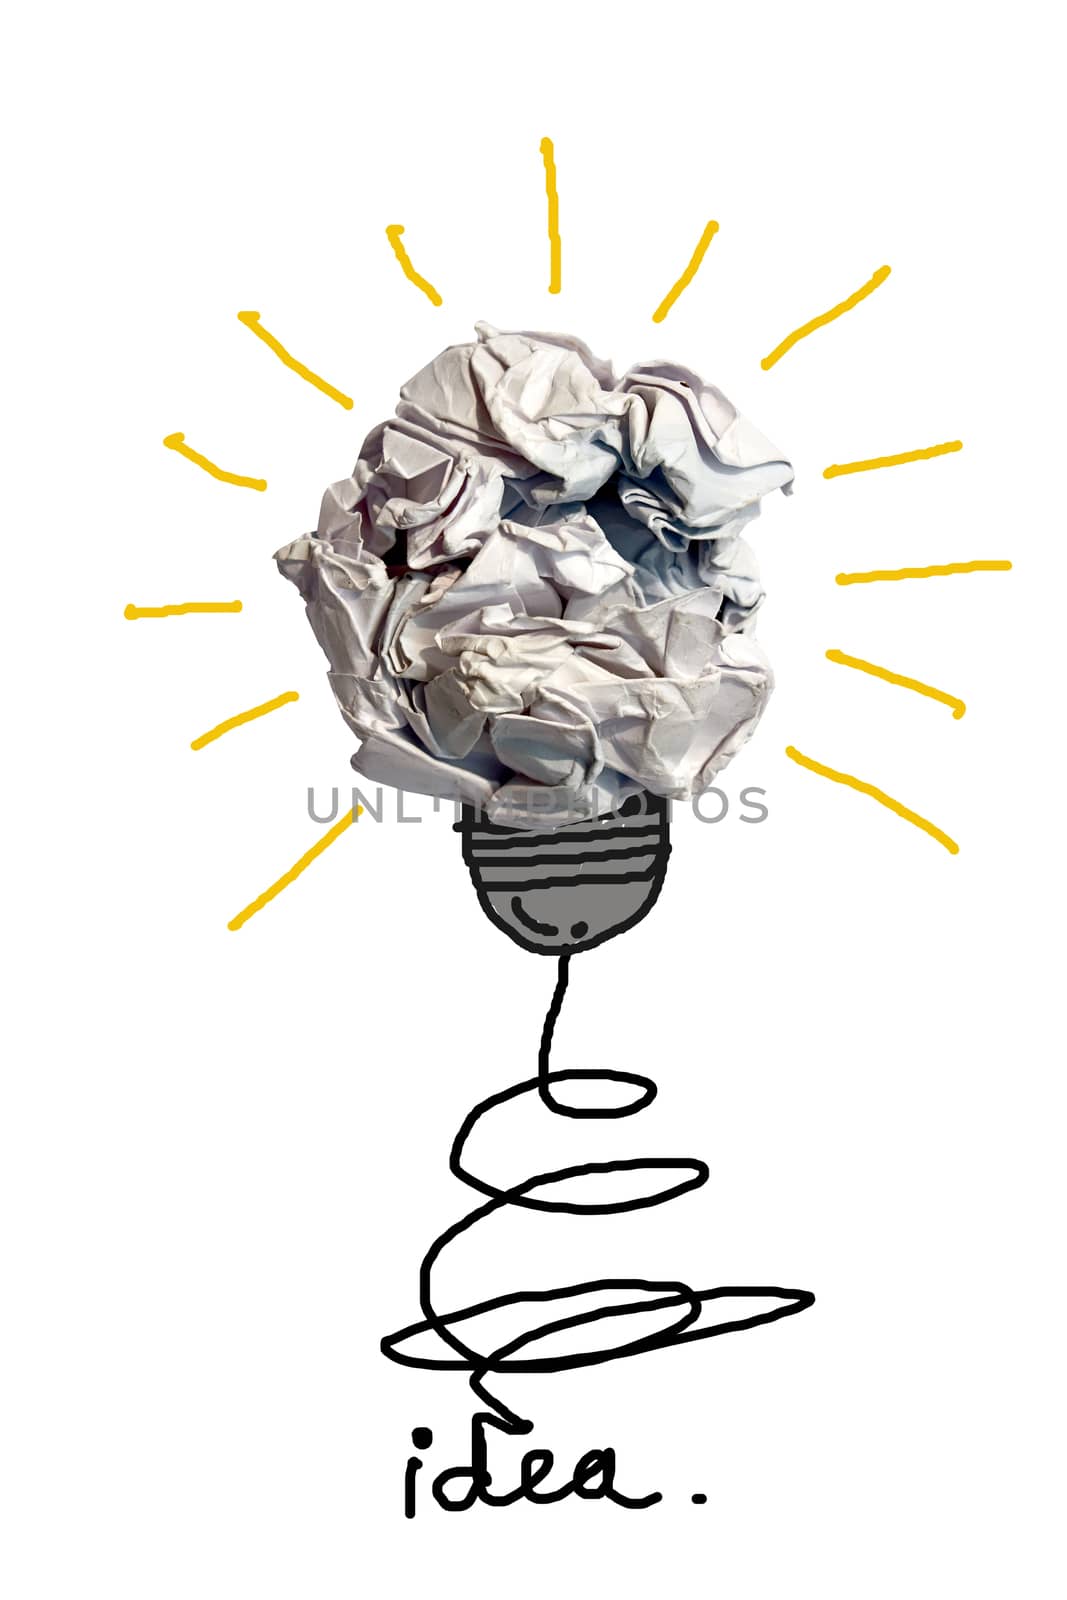 concept crumpled paper light bulb metaphor for good idea